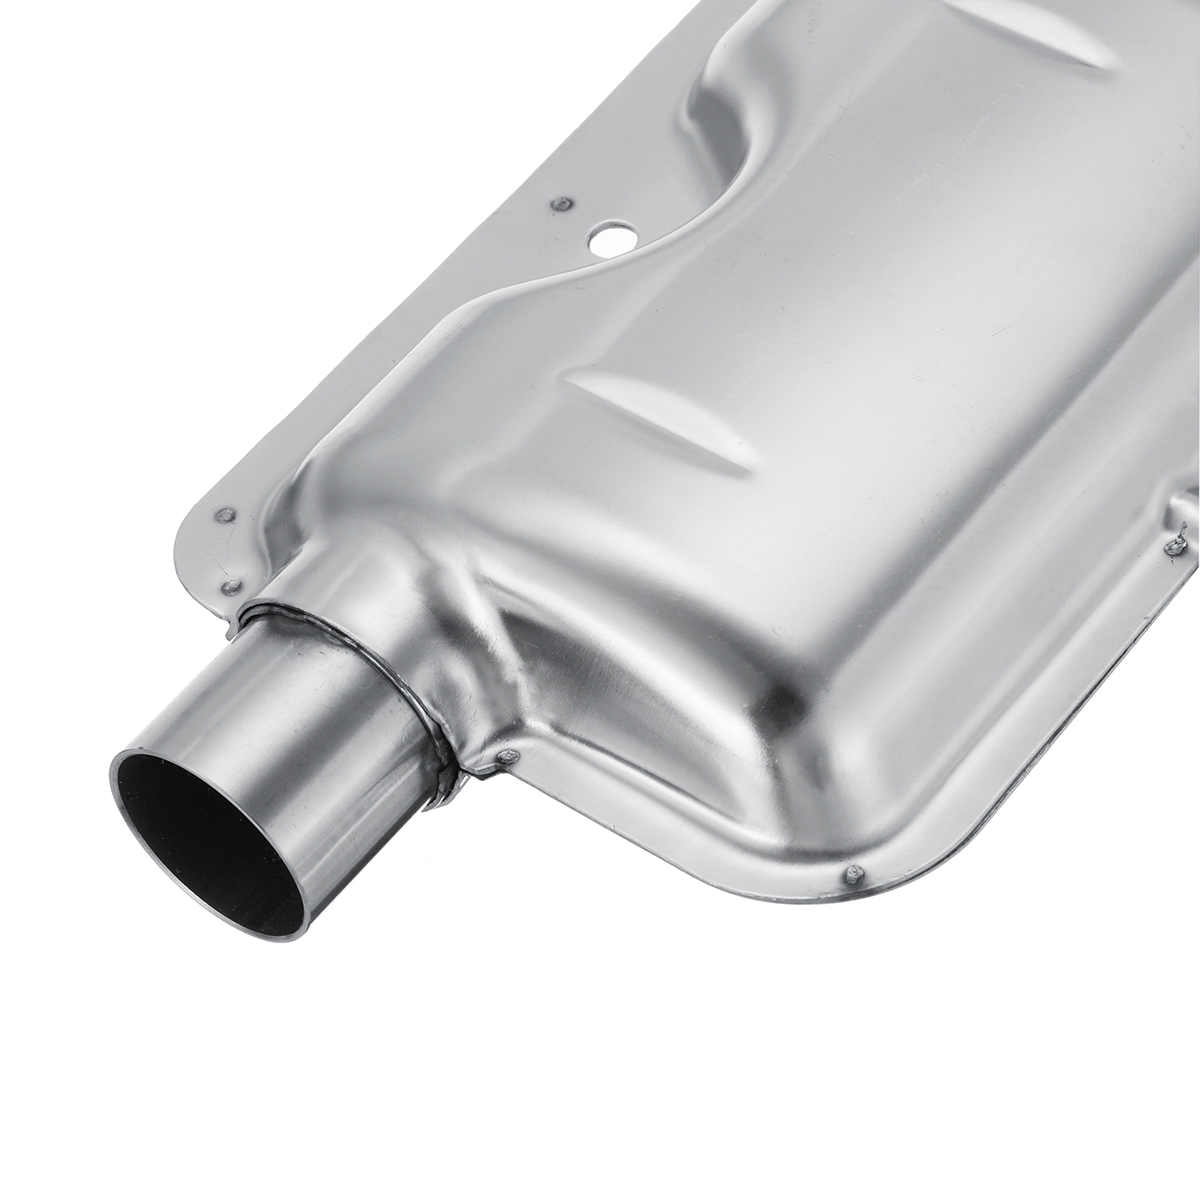 Diesel-Heater-Exhaust-Muffler-Pipe-Silencer-Clamps-Bracket-1366648-6